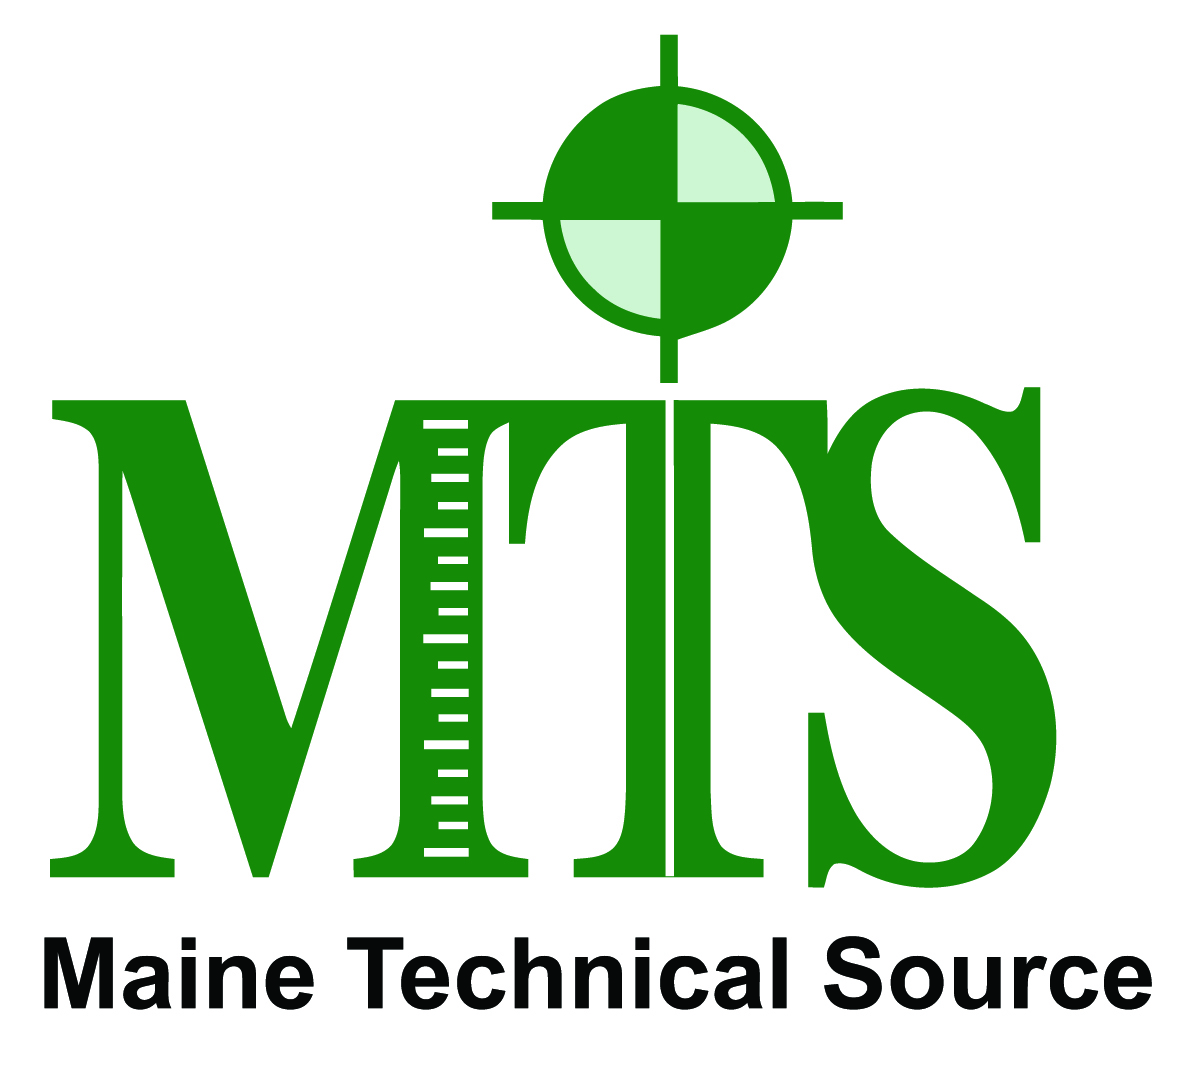 MTS_logo_Maine_Technical_Source_01-25-16